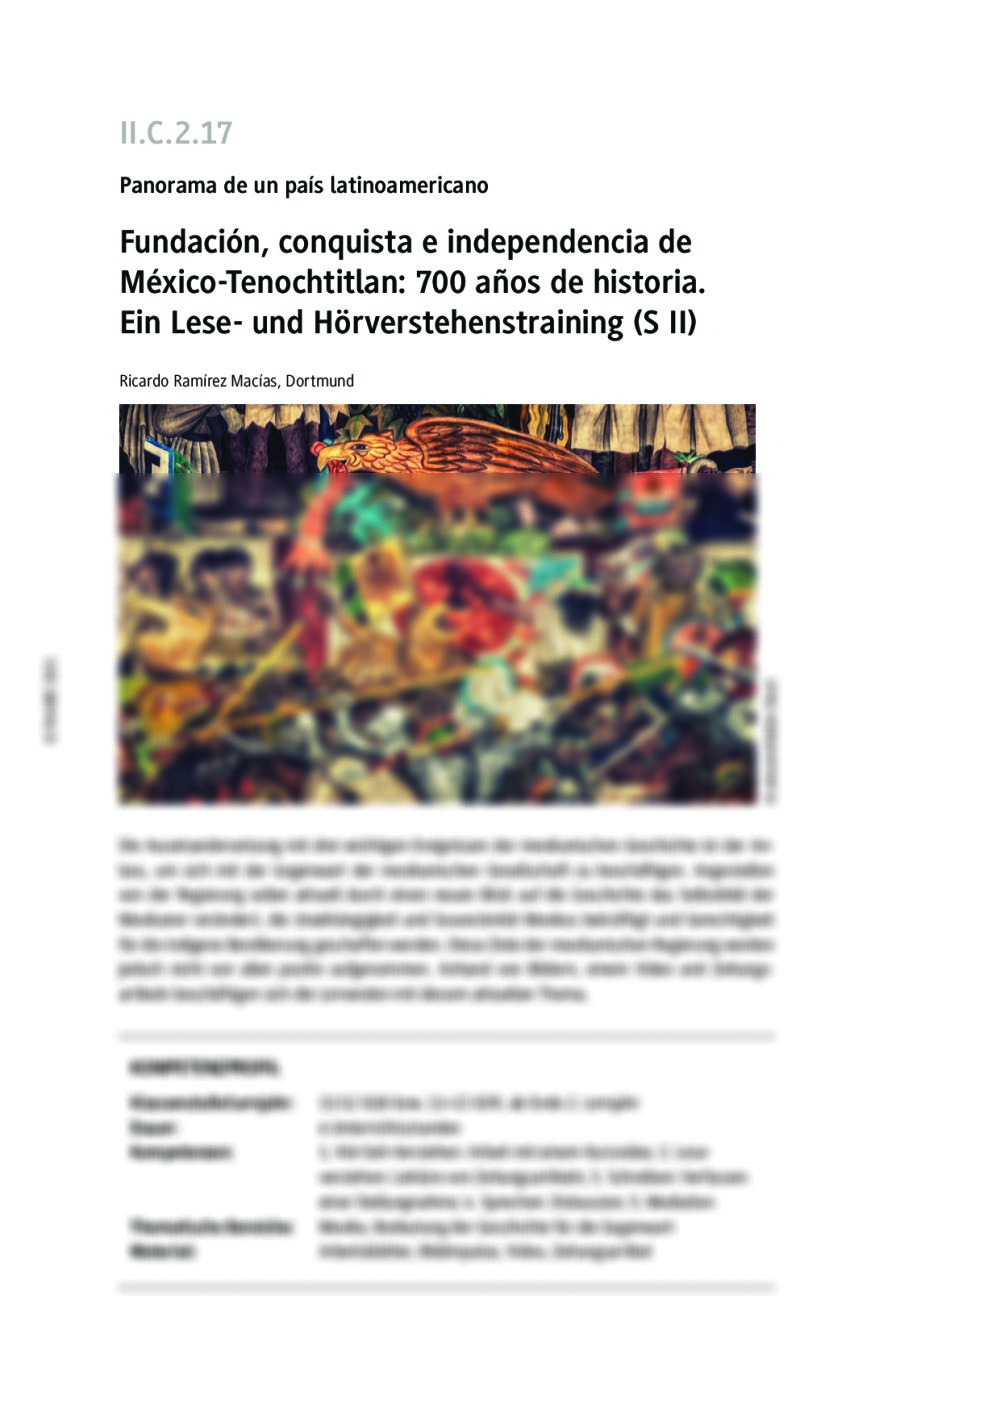 Fundación, conquista e independencia de México-Tenochtitlan: 700 años de historia - Seite 1